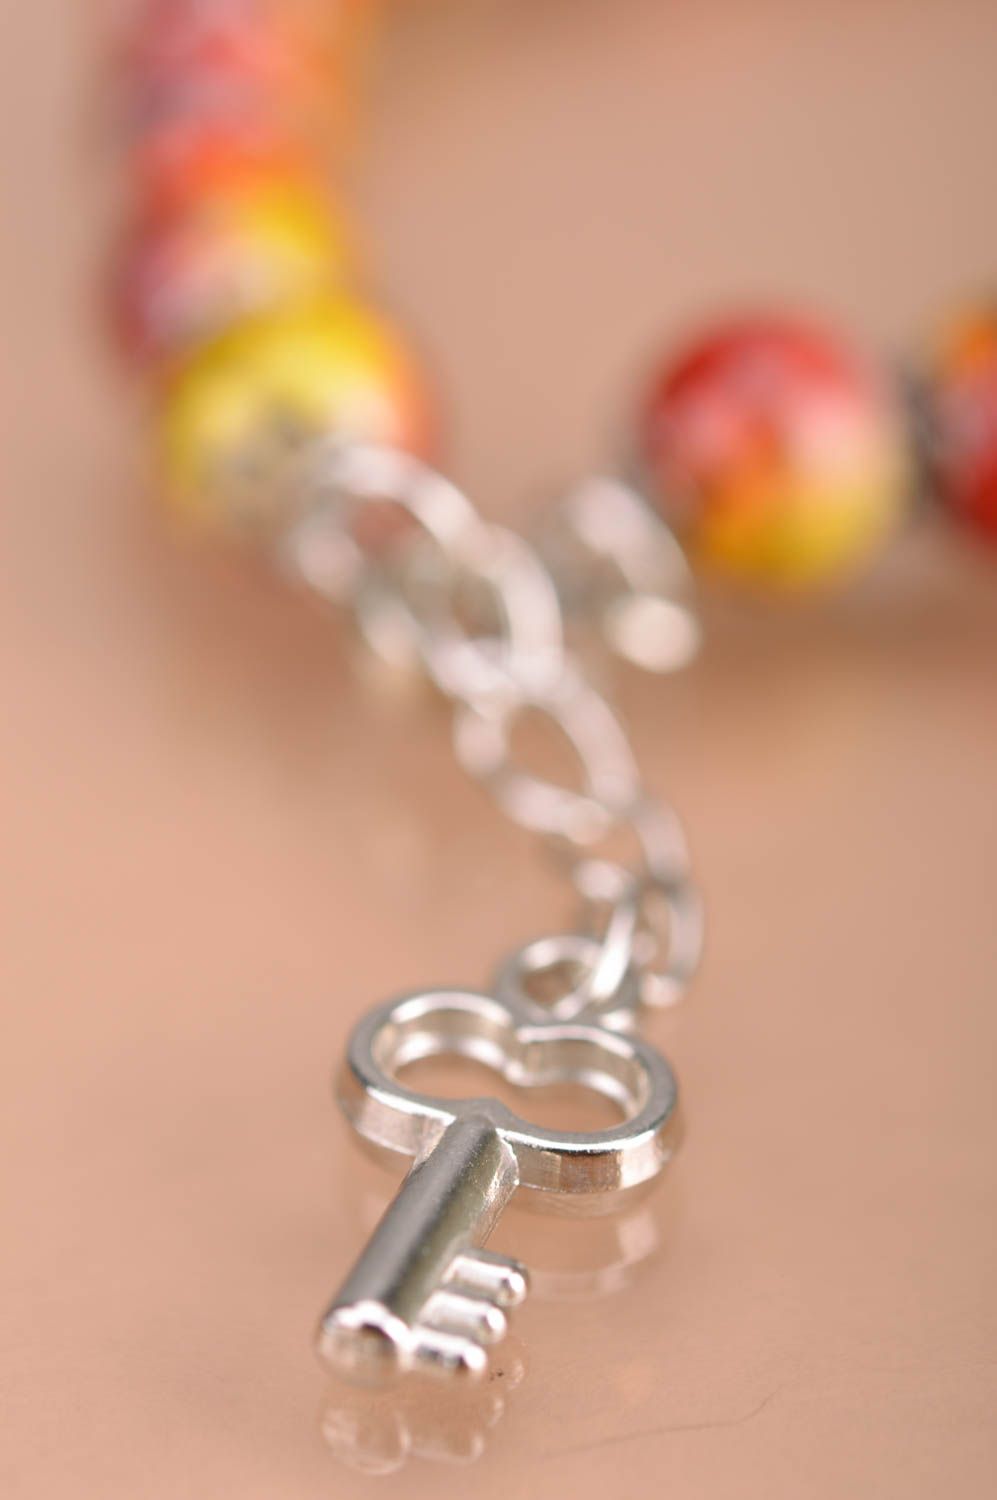 Handmade colorful glass bead wrist bracelet with metal charm key for women photo 4